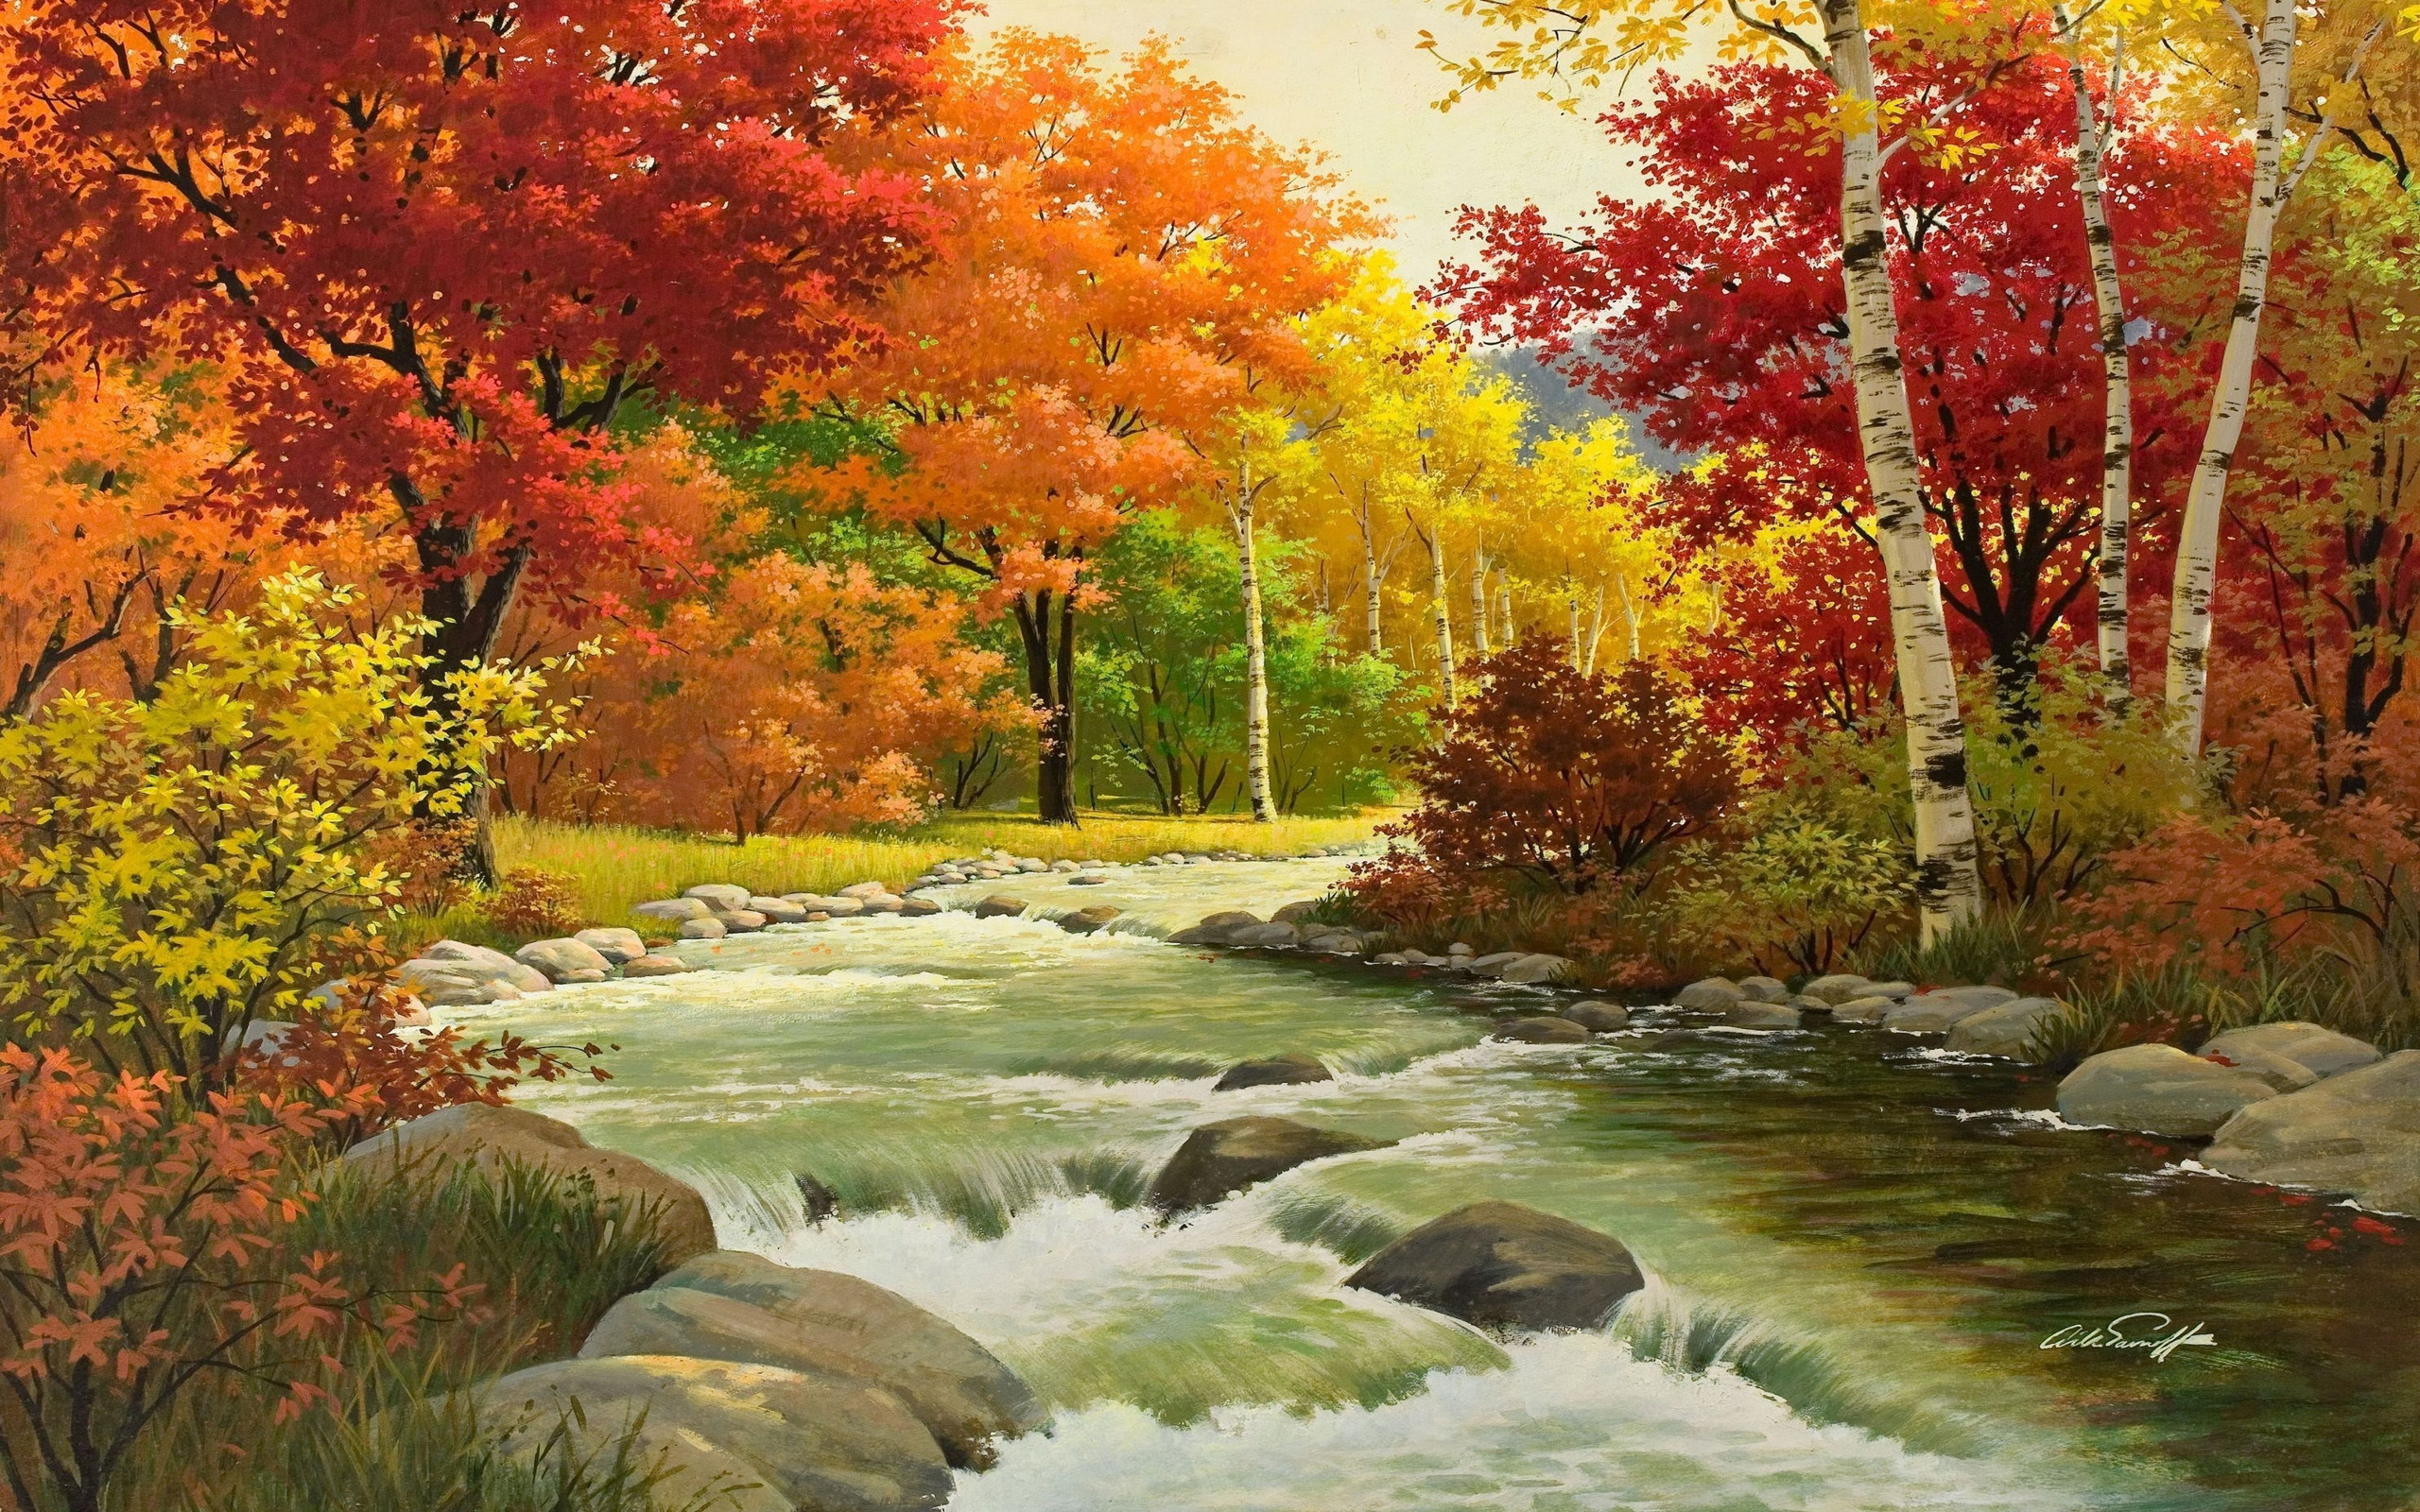 Flowing River Nature Fall Wallpaper : Wallpapers13.com